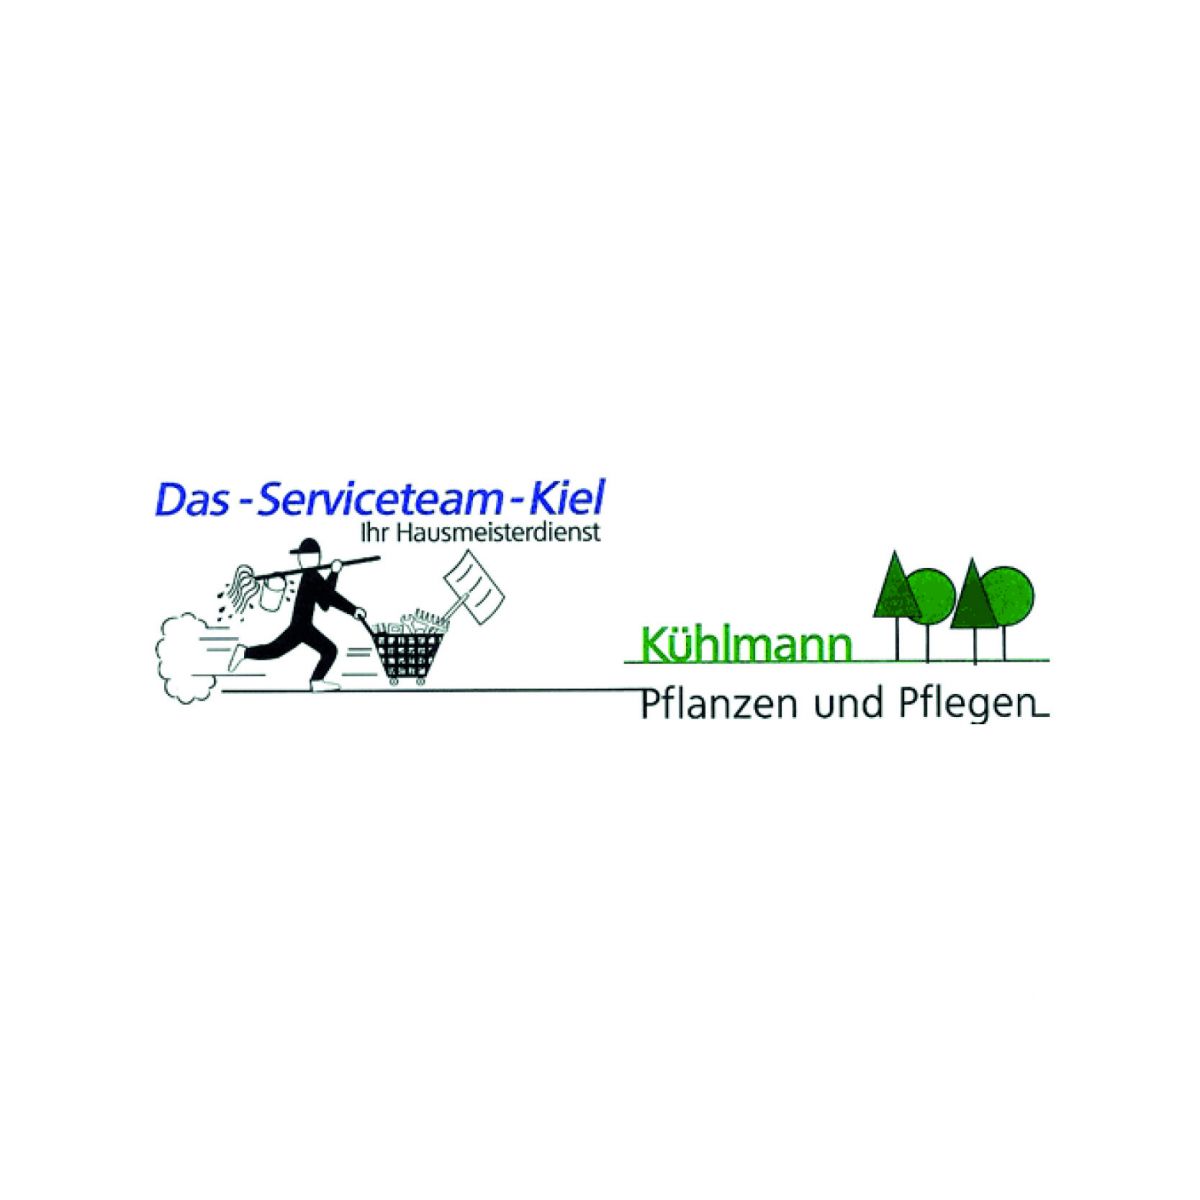 Das Serviceteam Kiel Logo - Kunde Wettermanufaktur